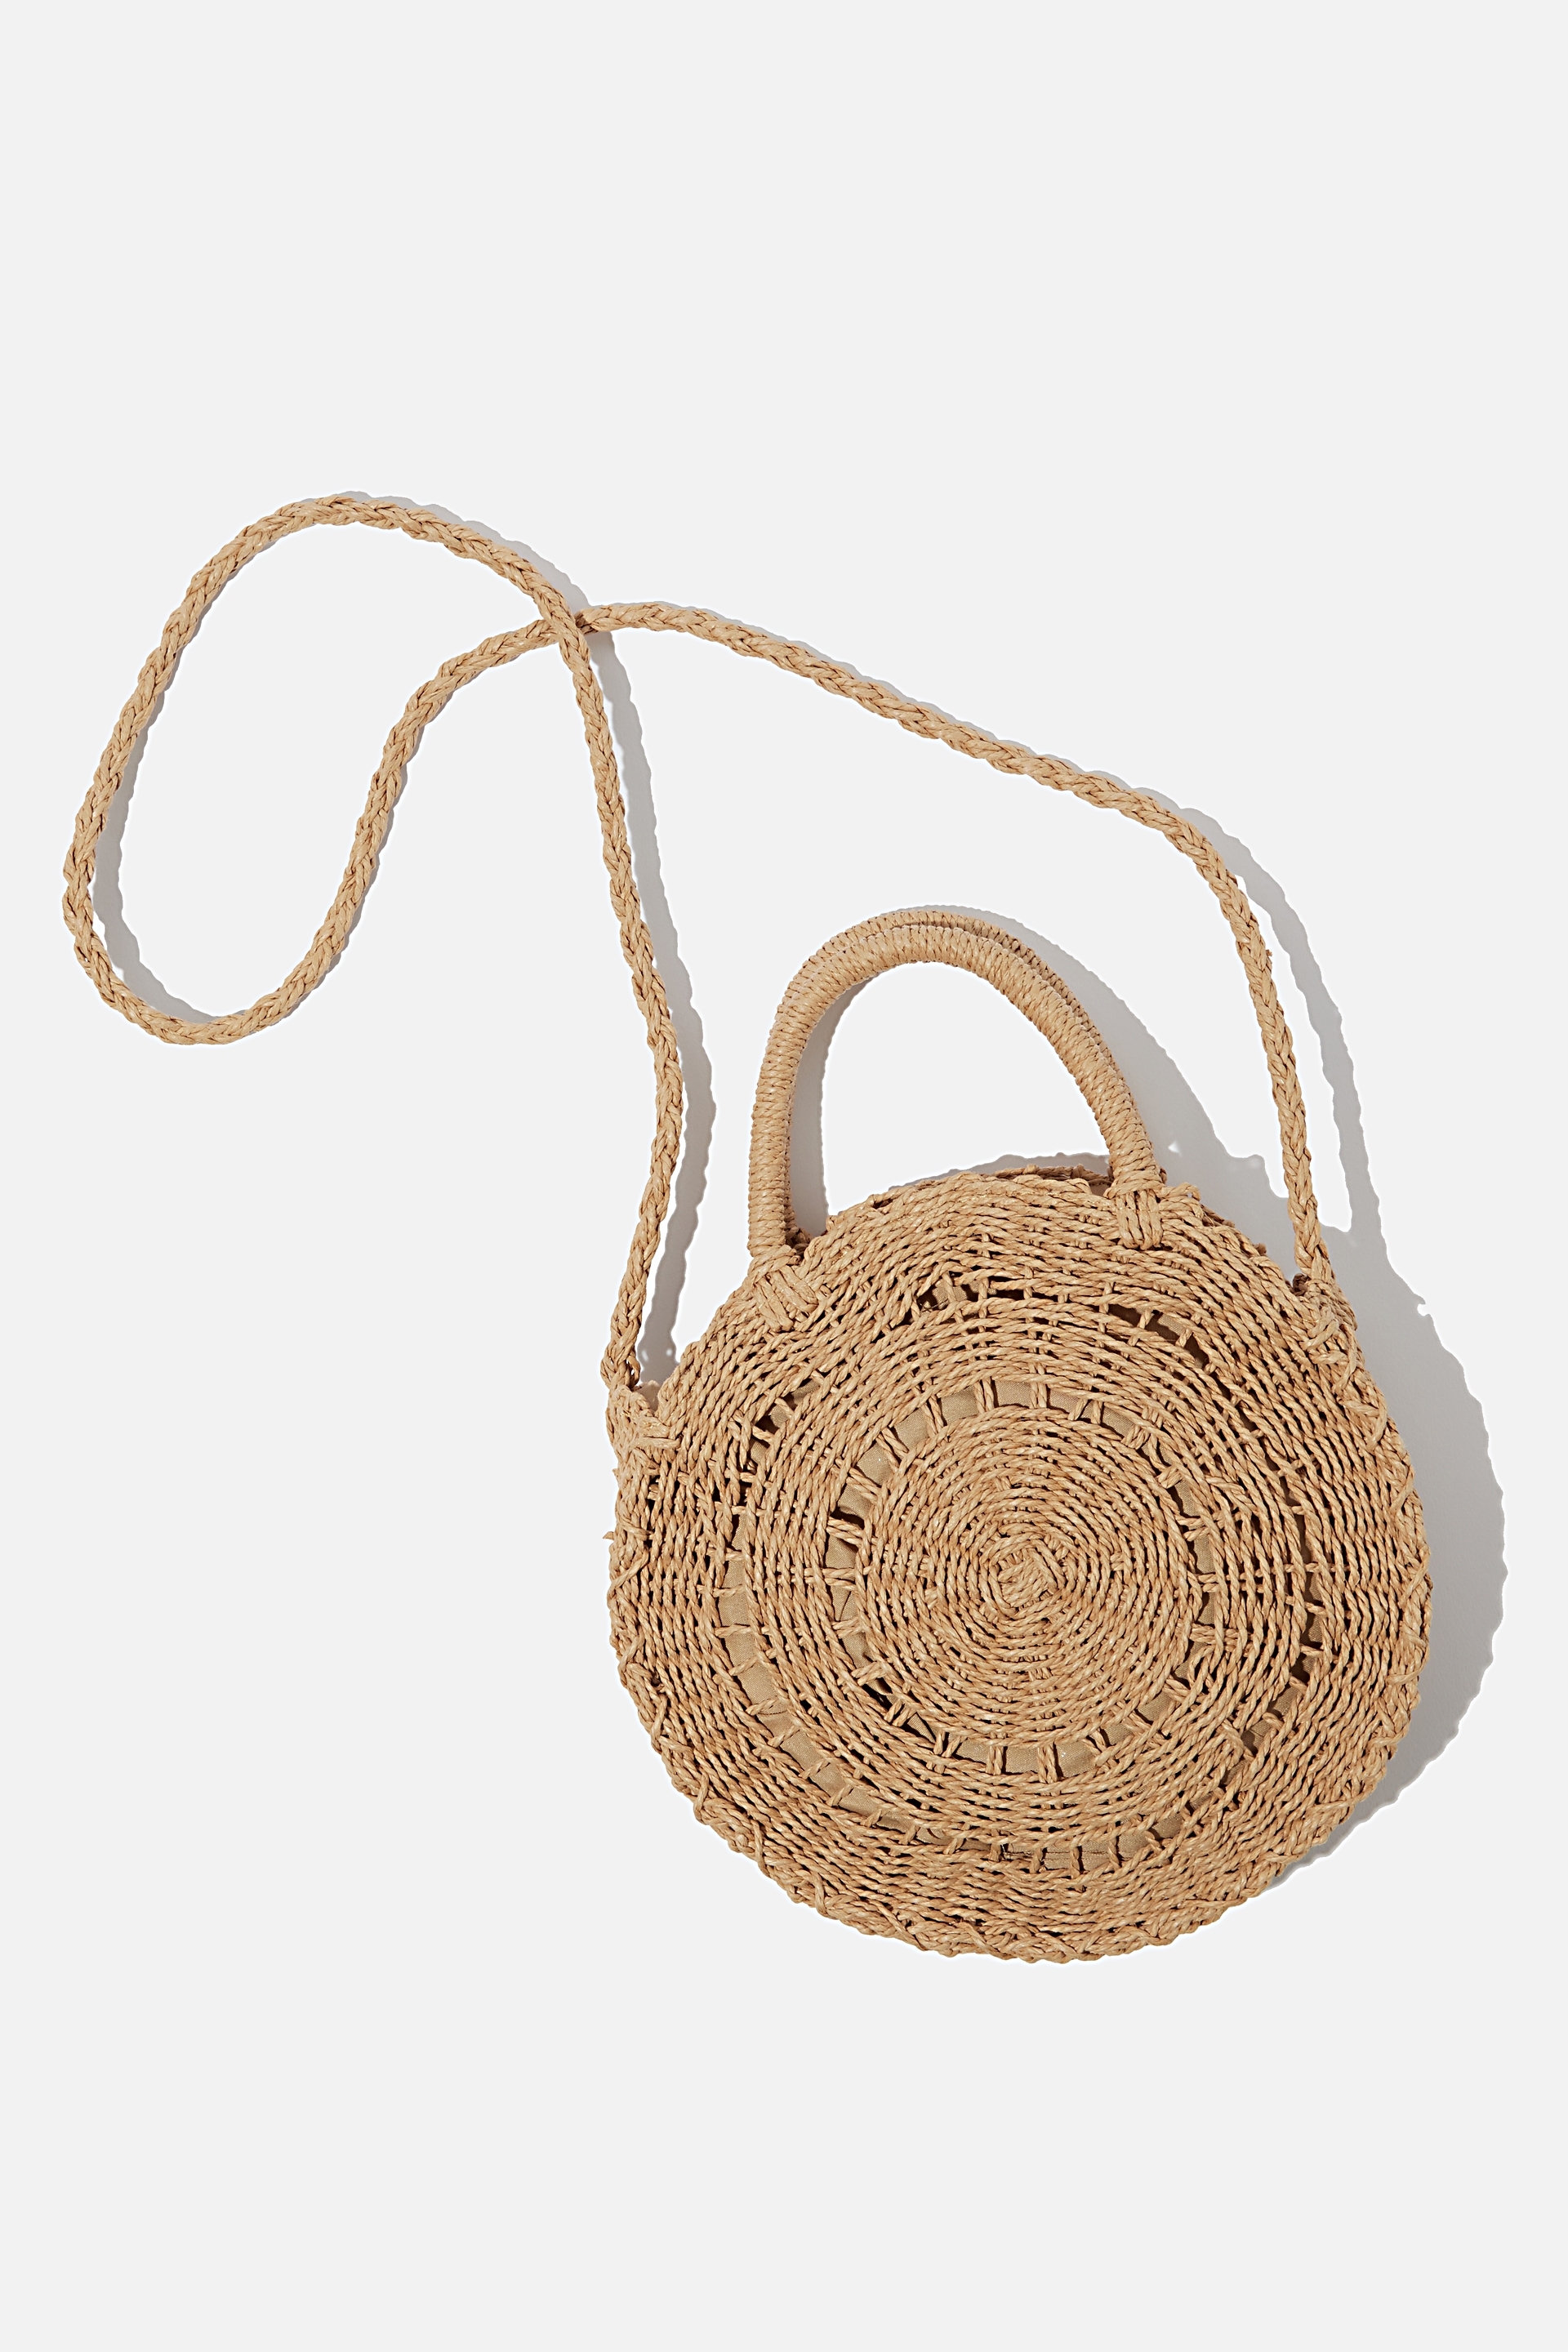 Cotton on brown woven rattan beach bag